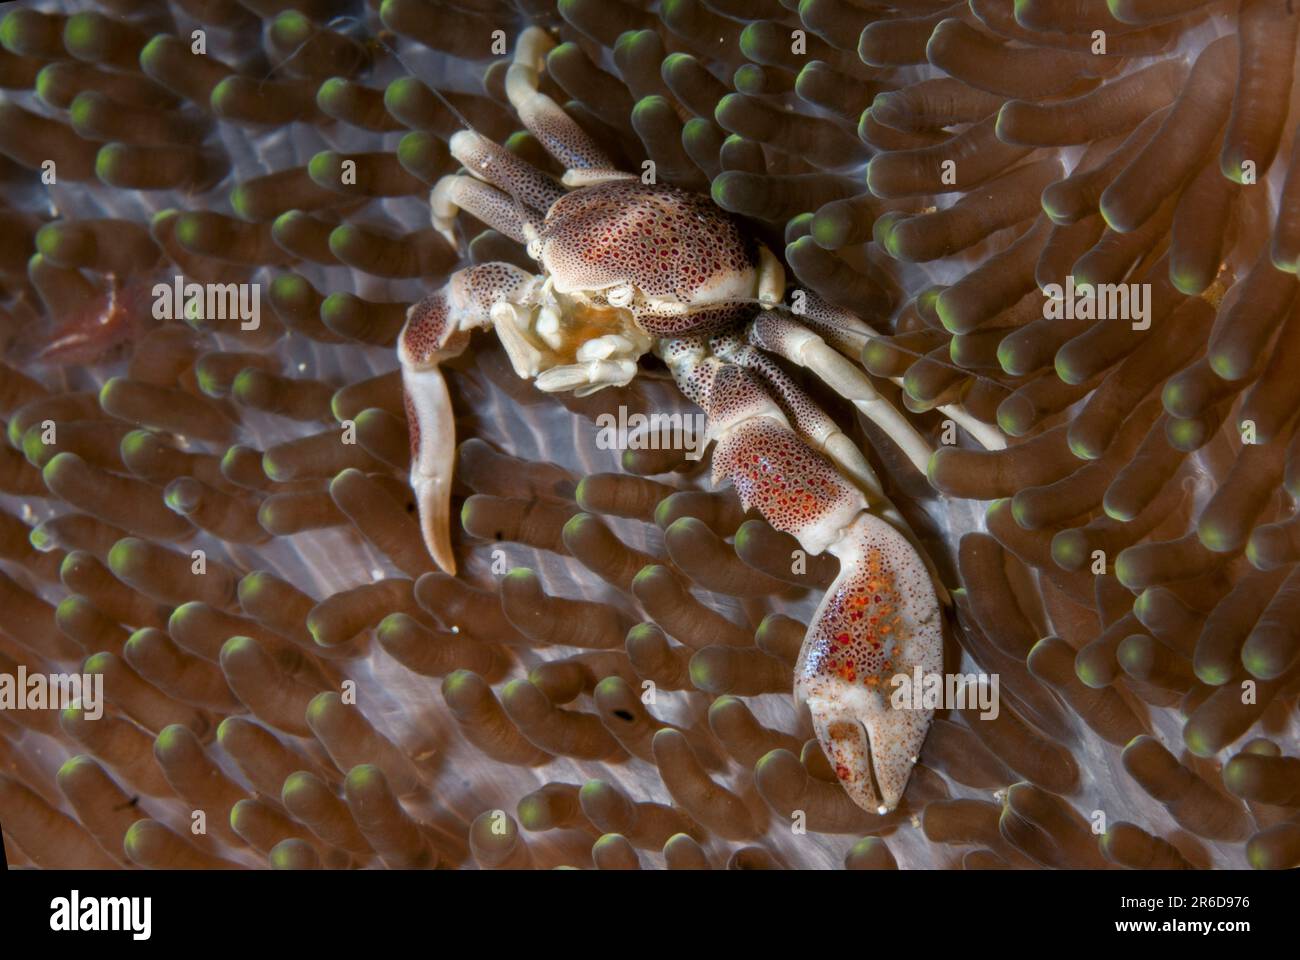 Porcelain Crab, Neopetrolisthes maculatus, on Giant Carpet Anemone, Stichodactyla gigantea, Kaino's Treasure dive site, Lembeh Straits, Sulawesi, Indo Stock Photo